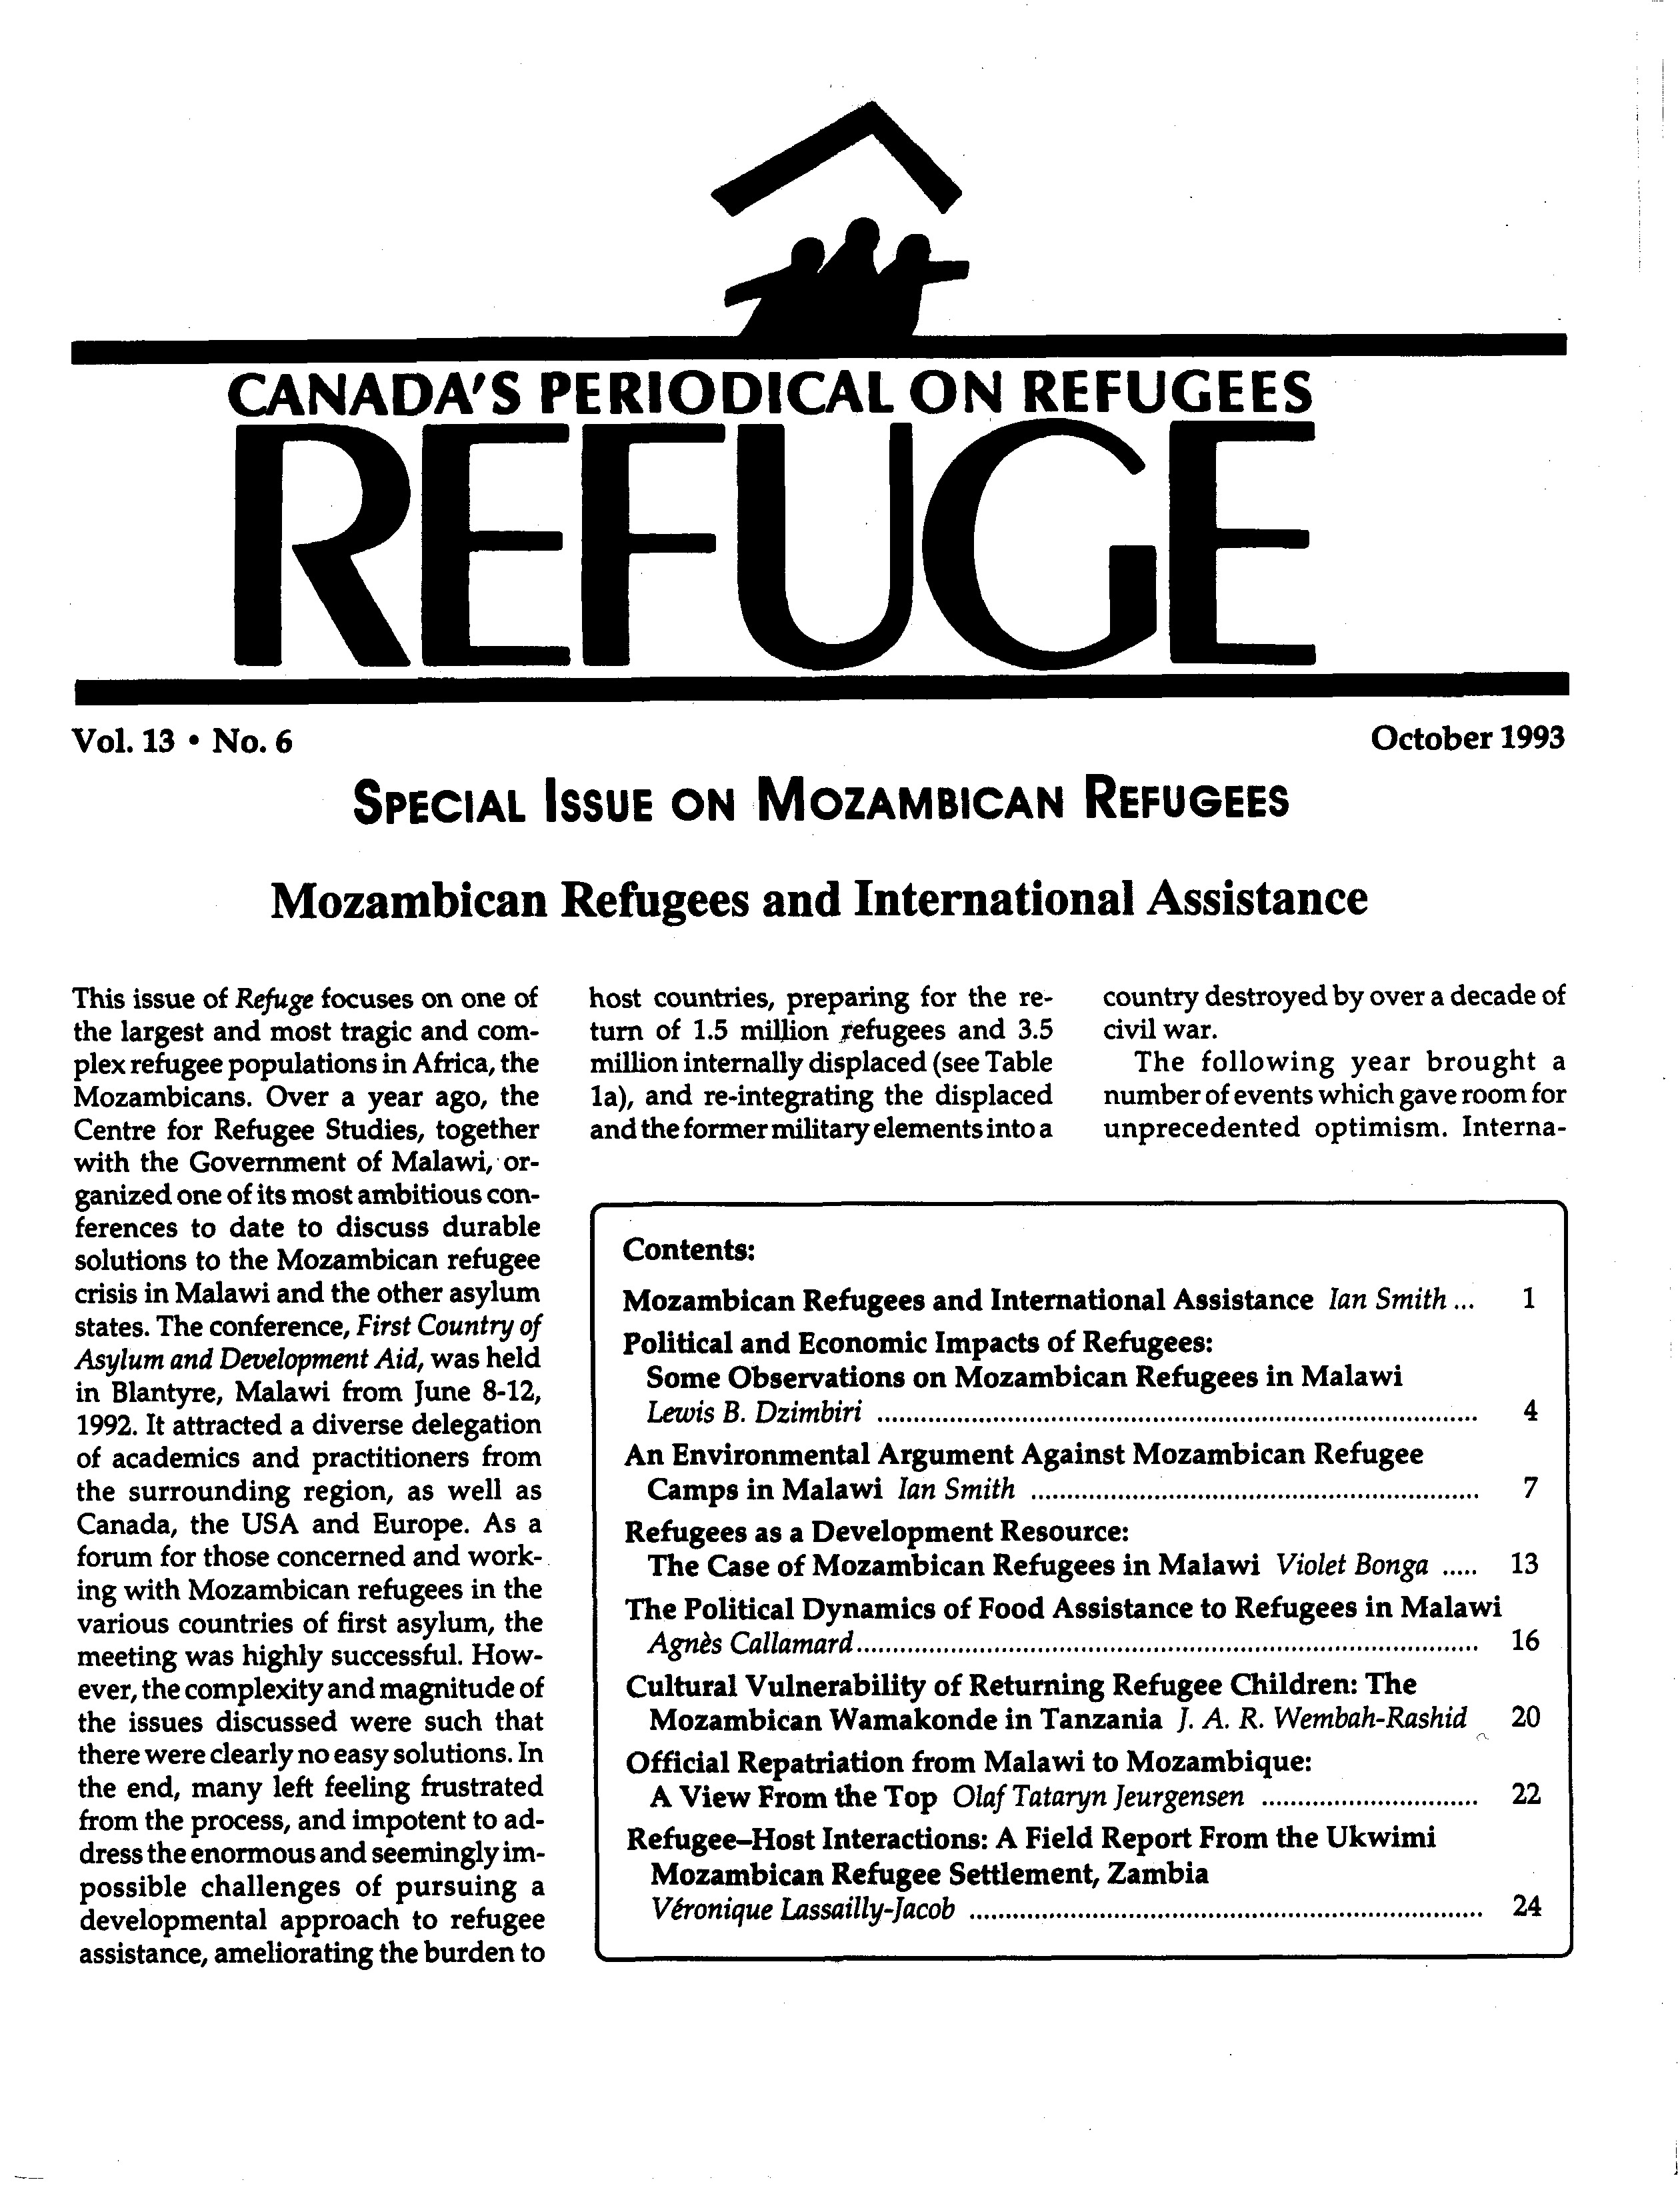 first page Refuge vol. 13.6 1993